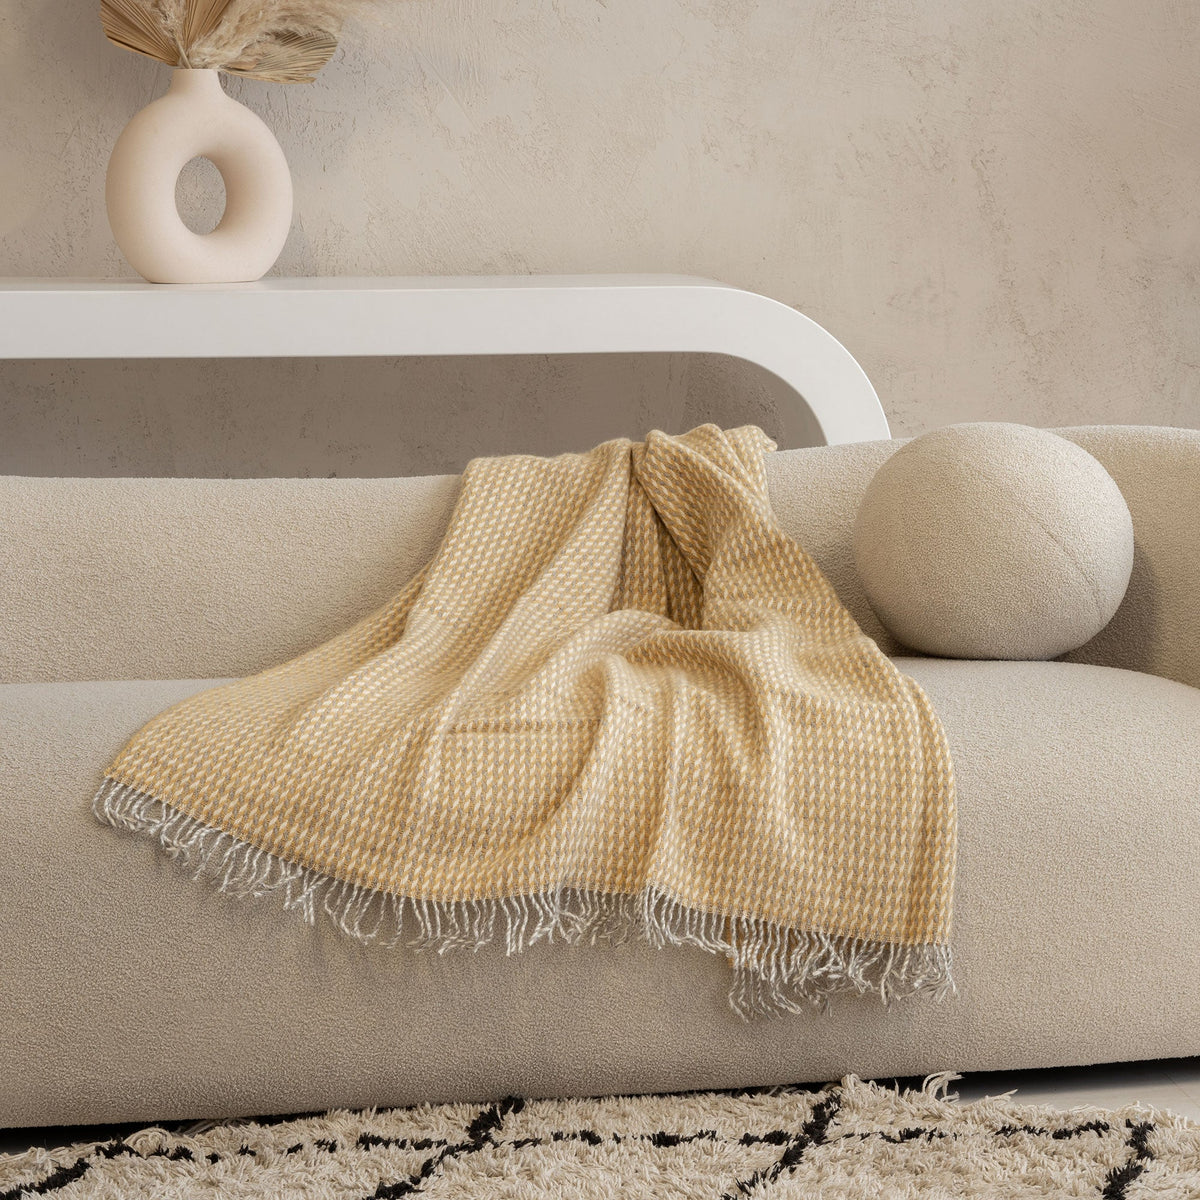 MENIQUE Virgin Wool Blanket Toronto